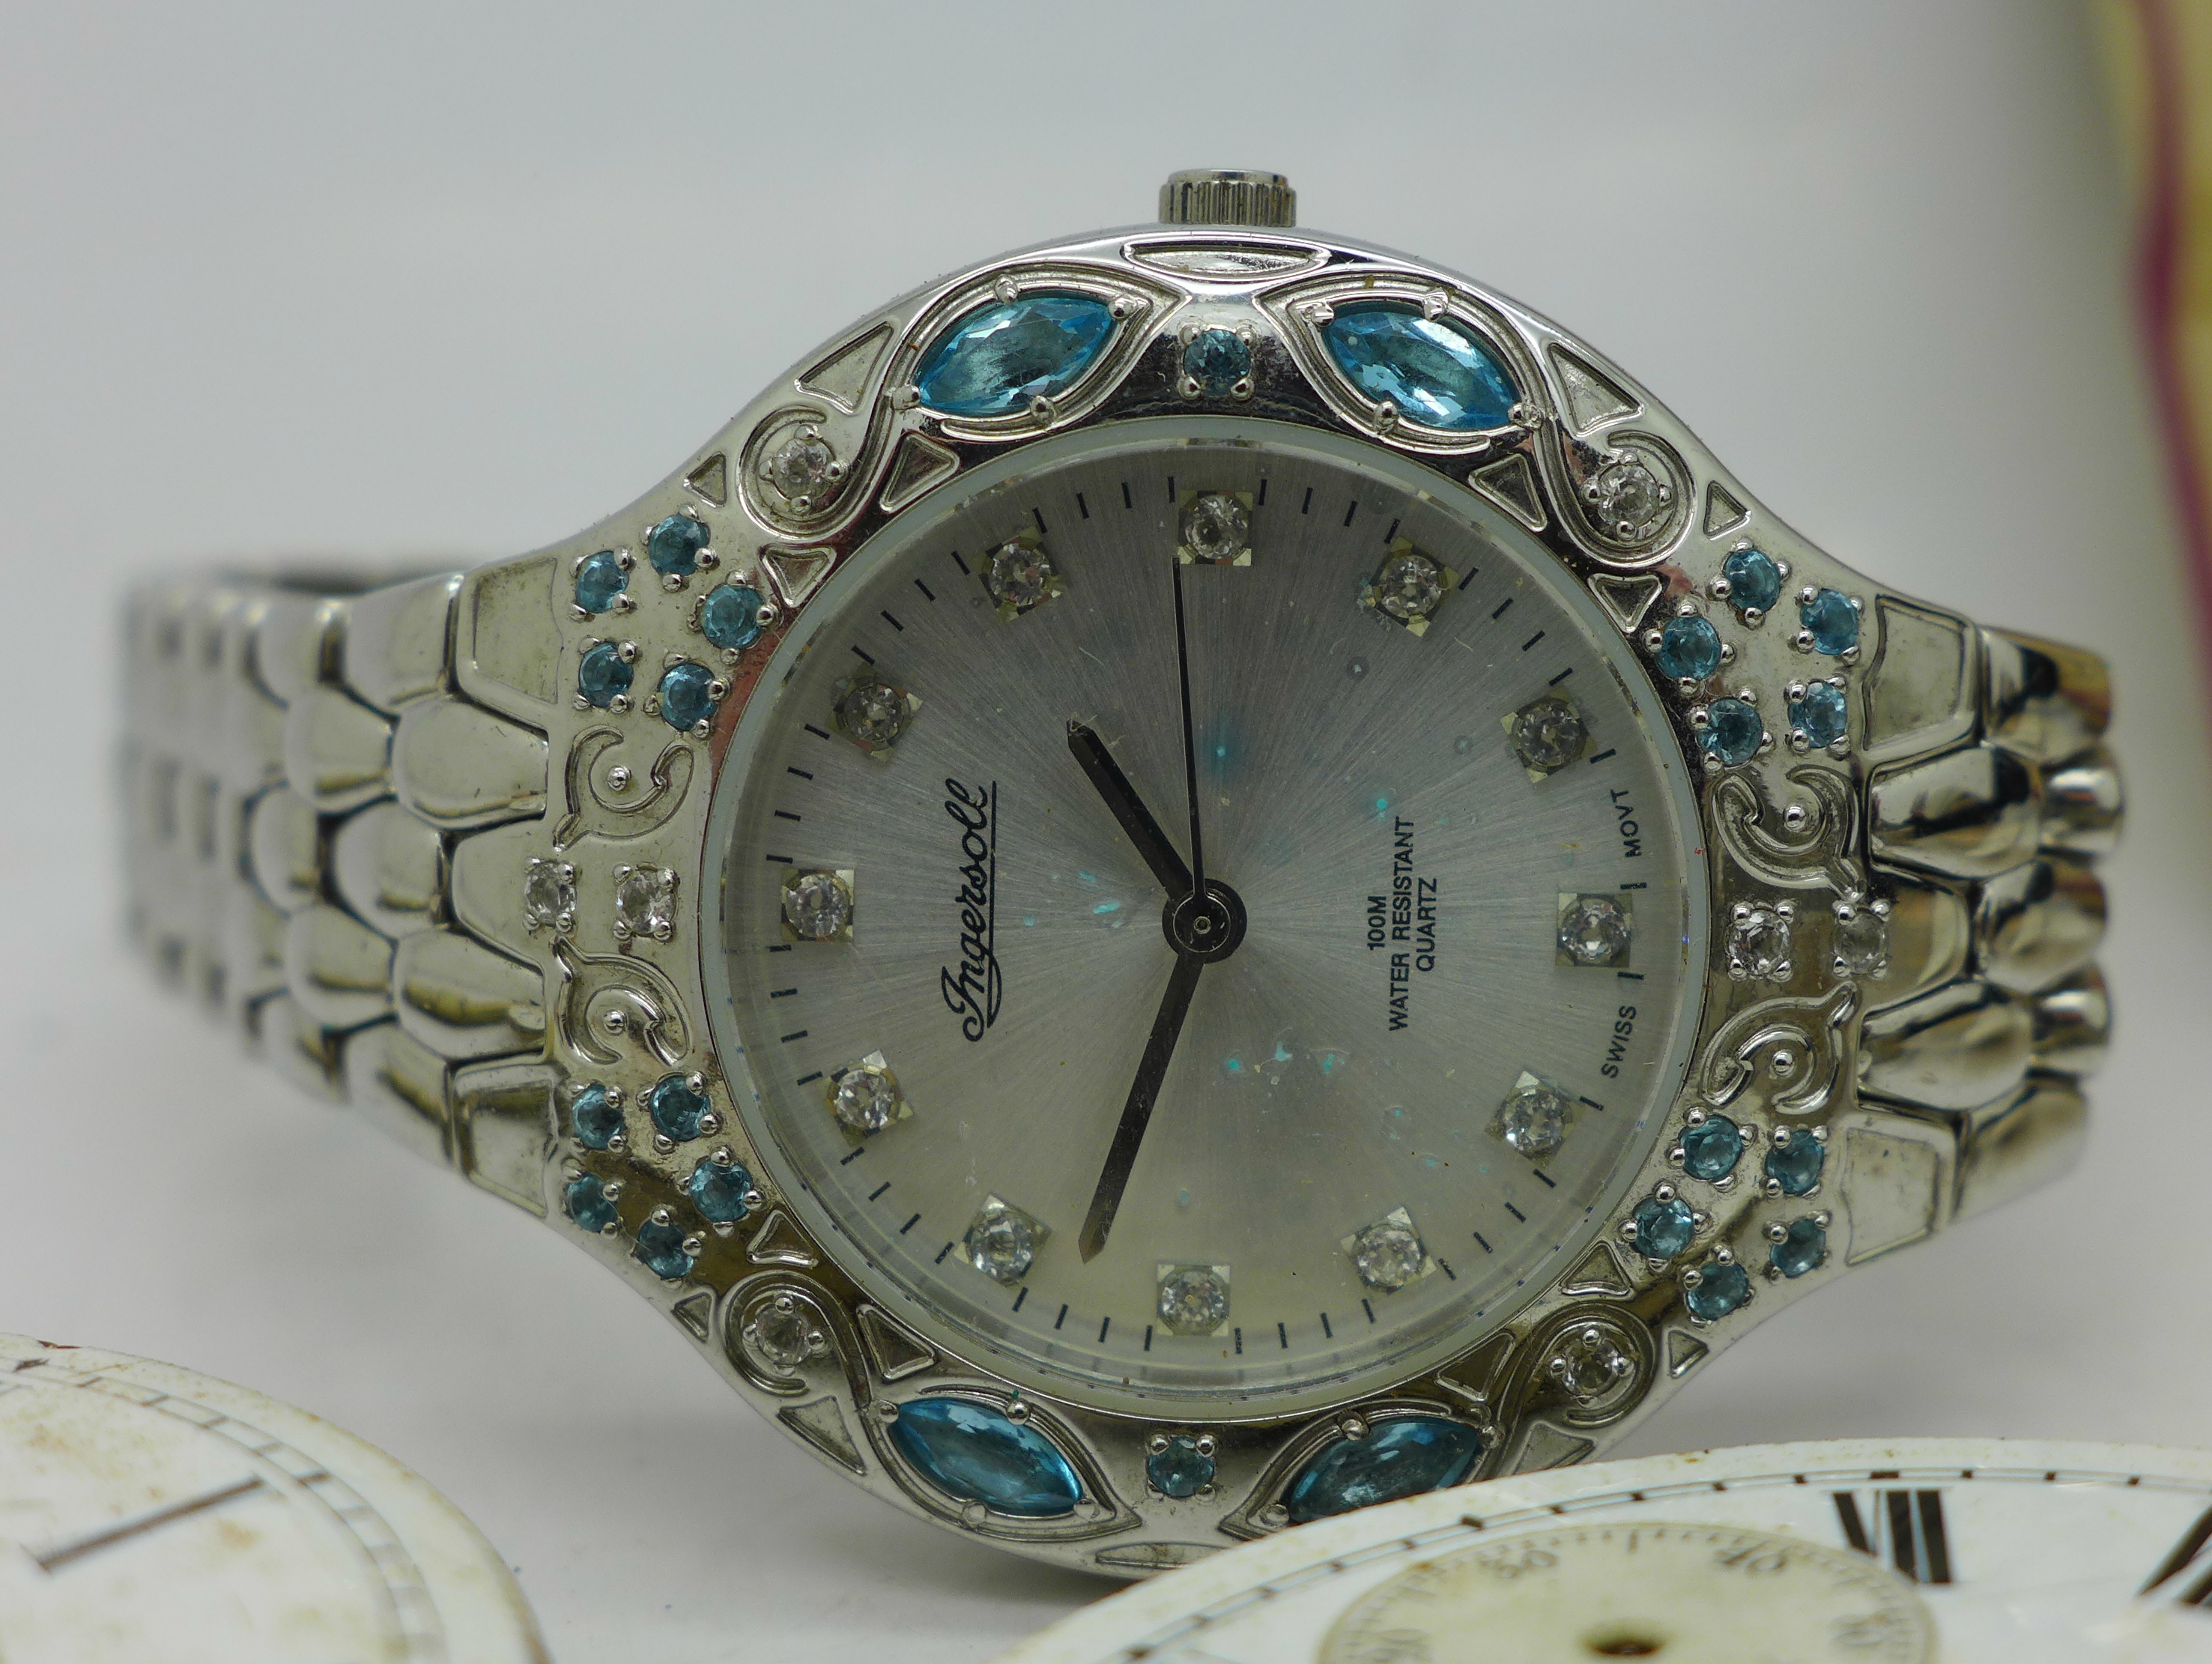 An Ingersoll Gems wristwatch, - Image 4 of 4